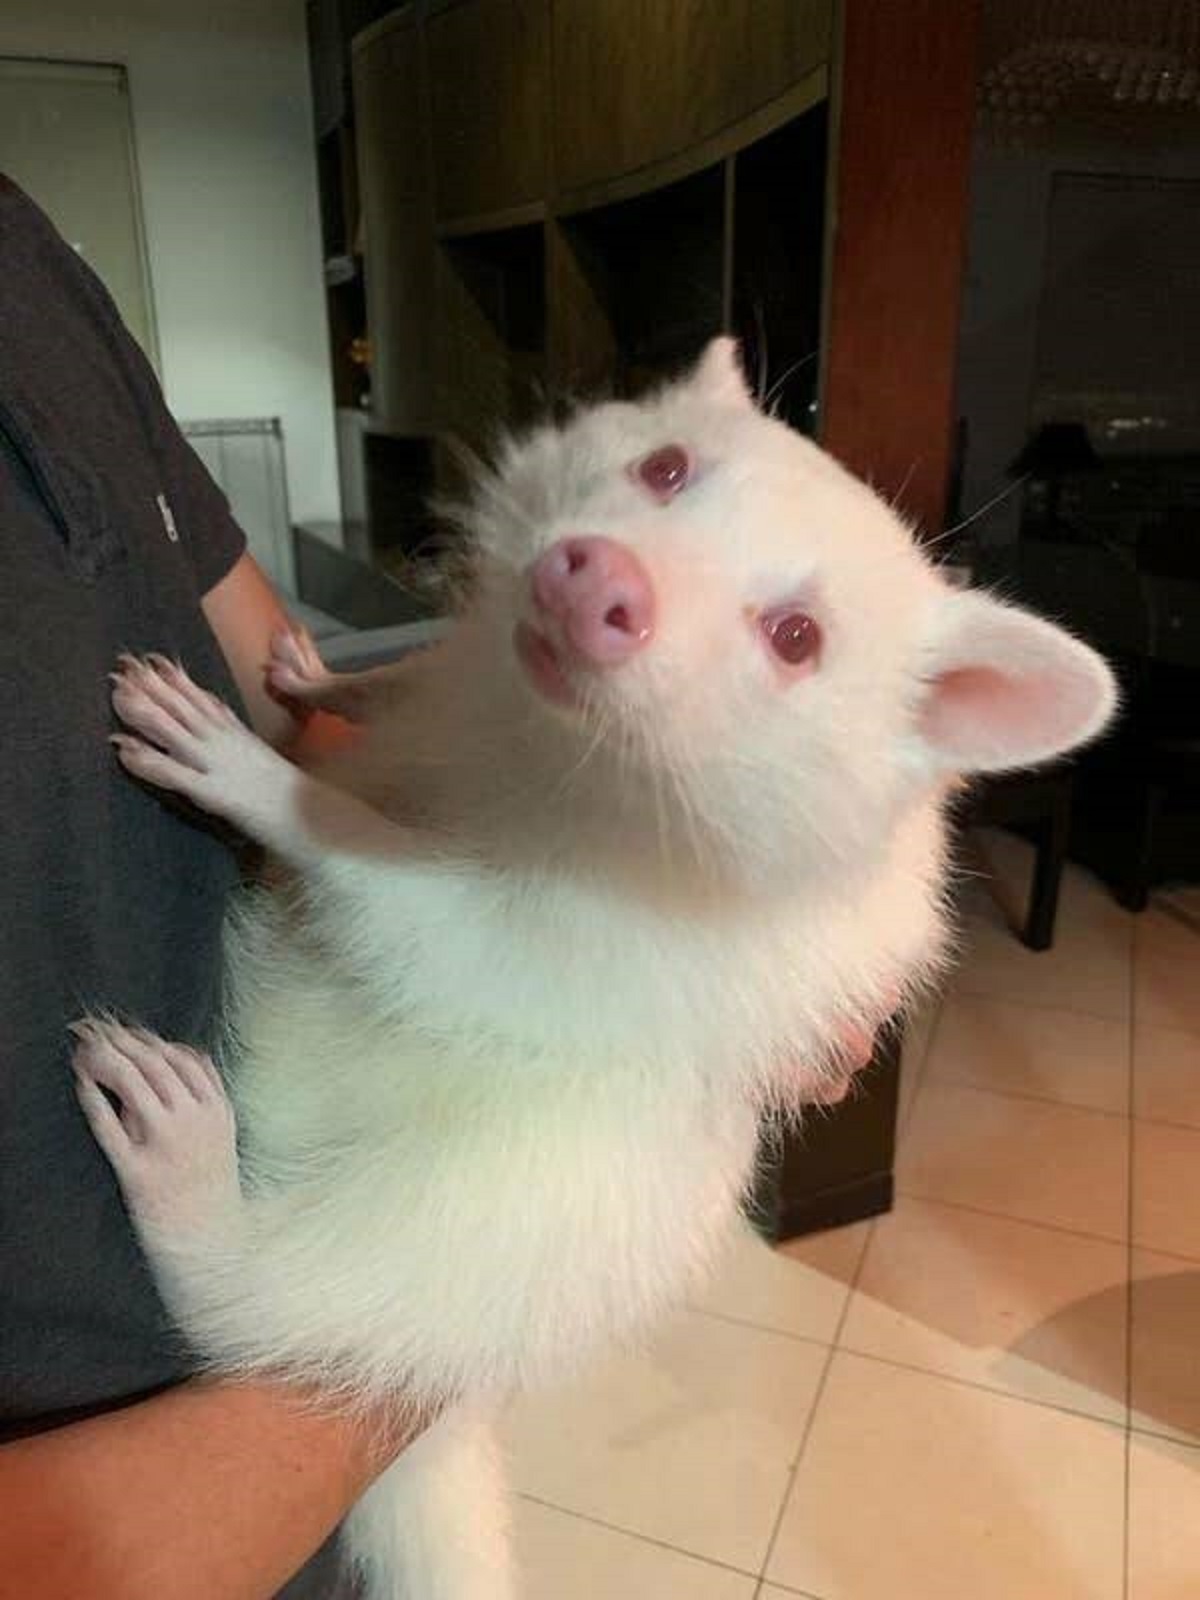 This is what an albino raccoon looks like: